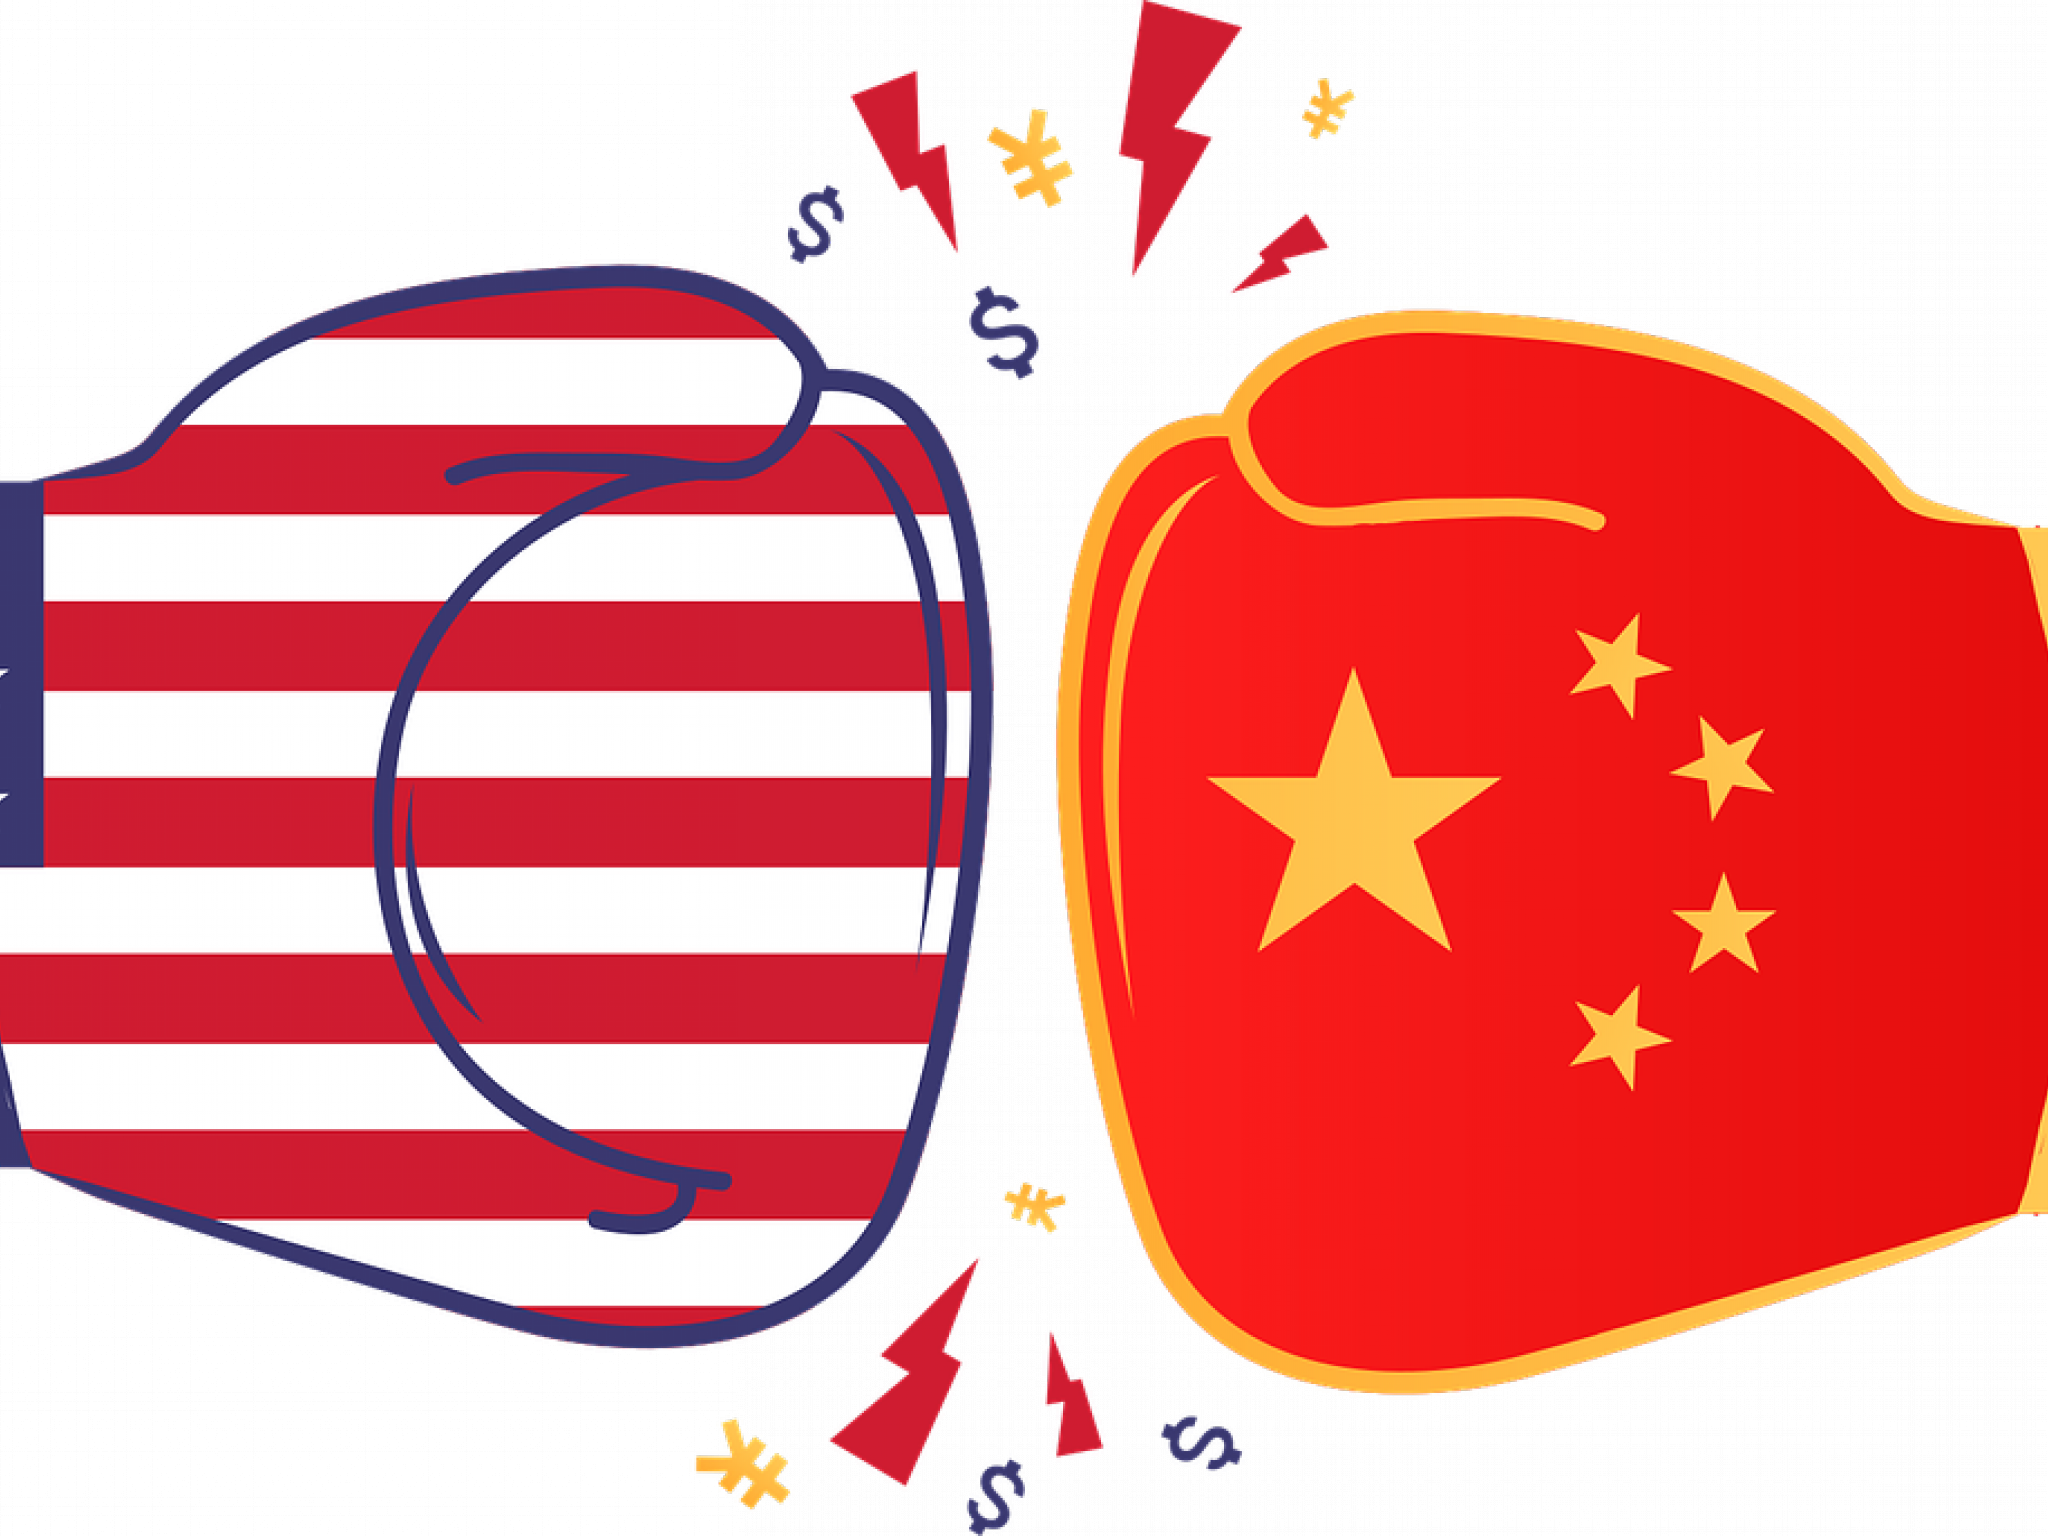  china-threatens-retaliation-against-nyse-move-to-delist-countrys-major-telecom-operators 